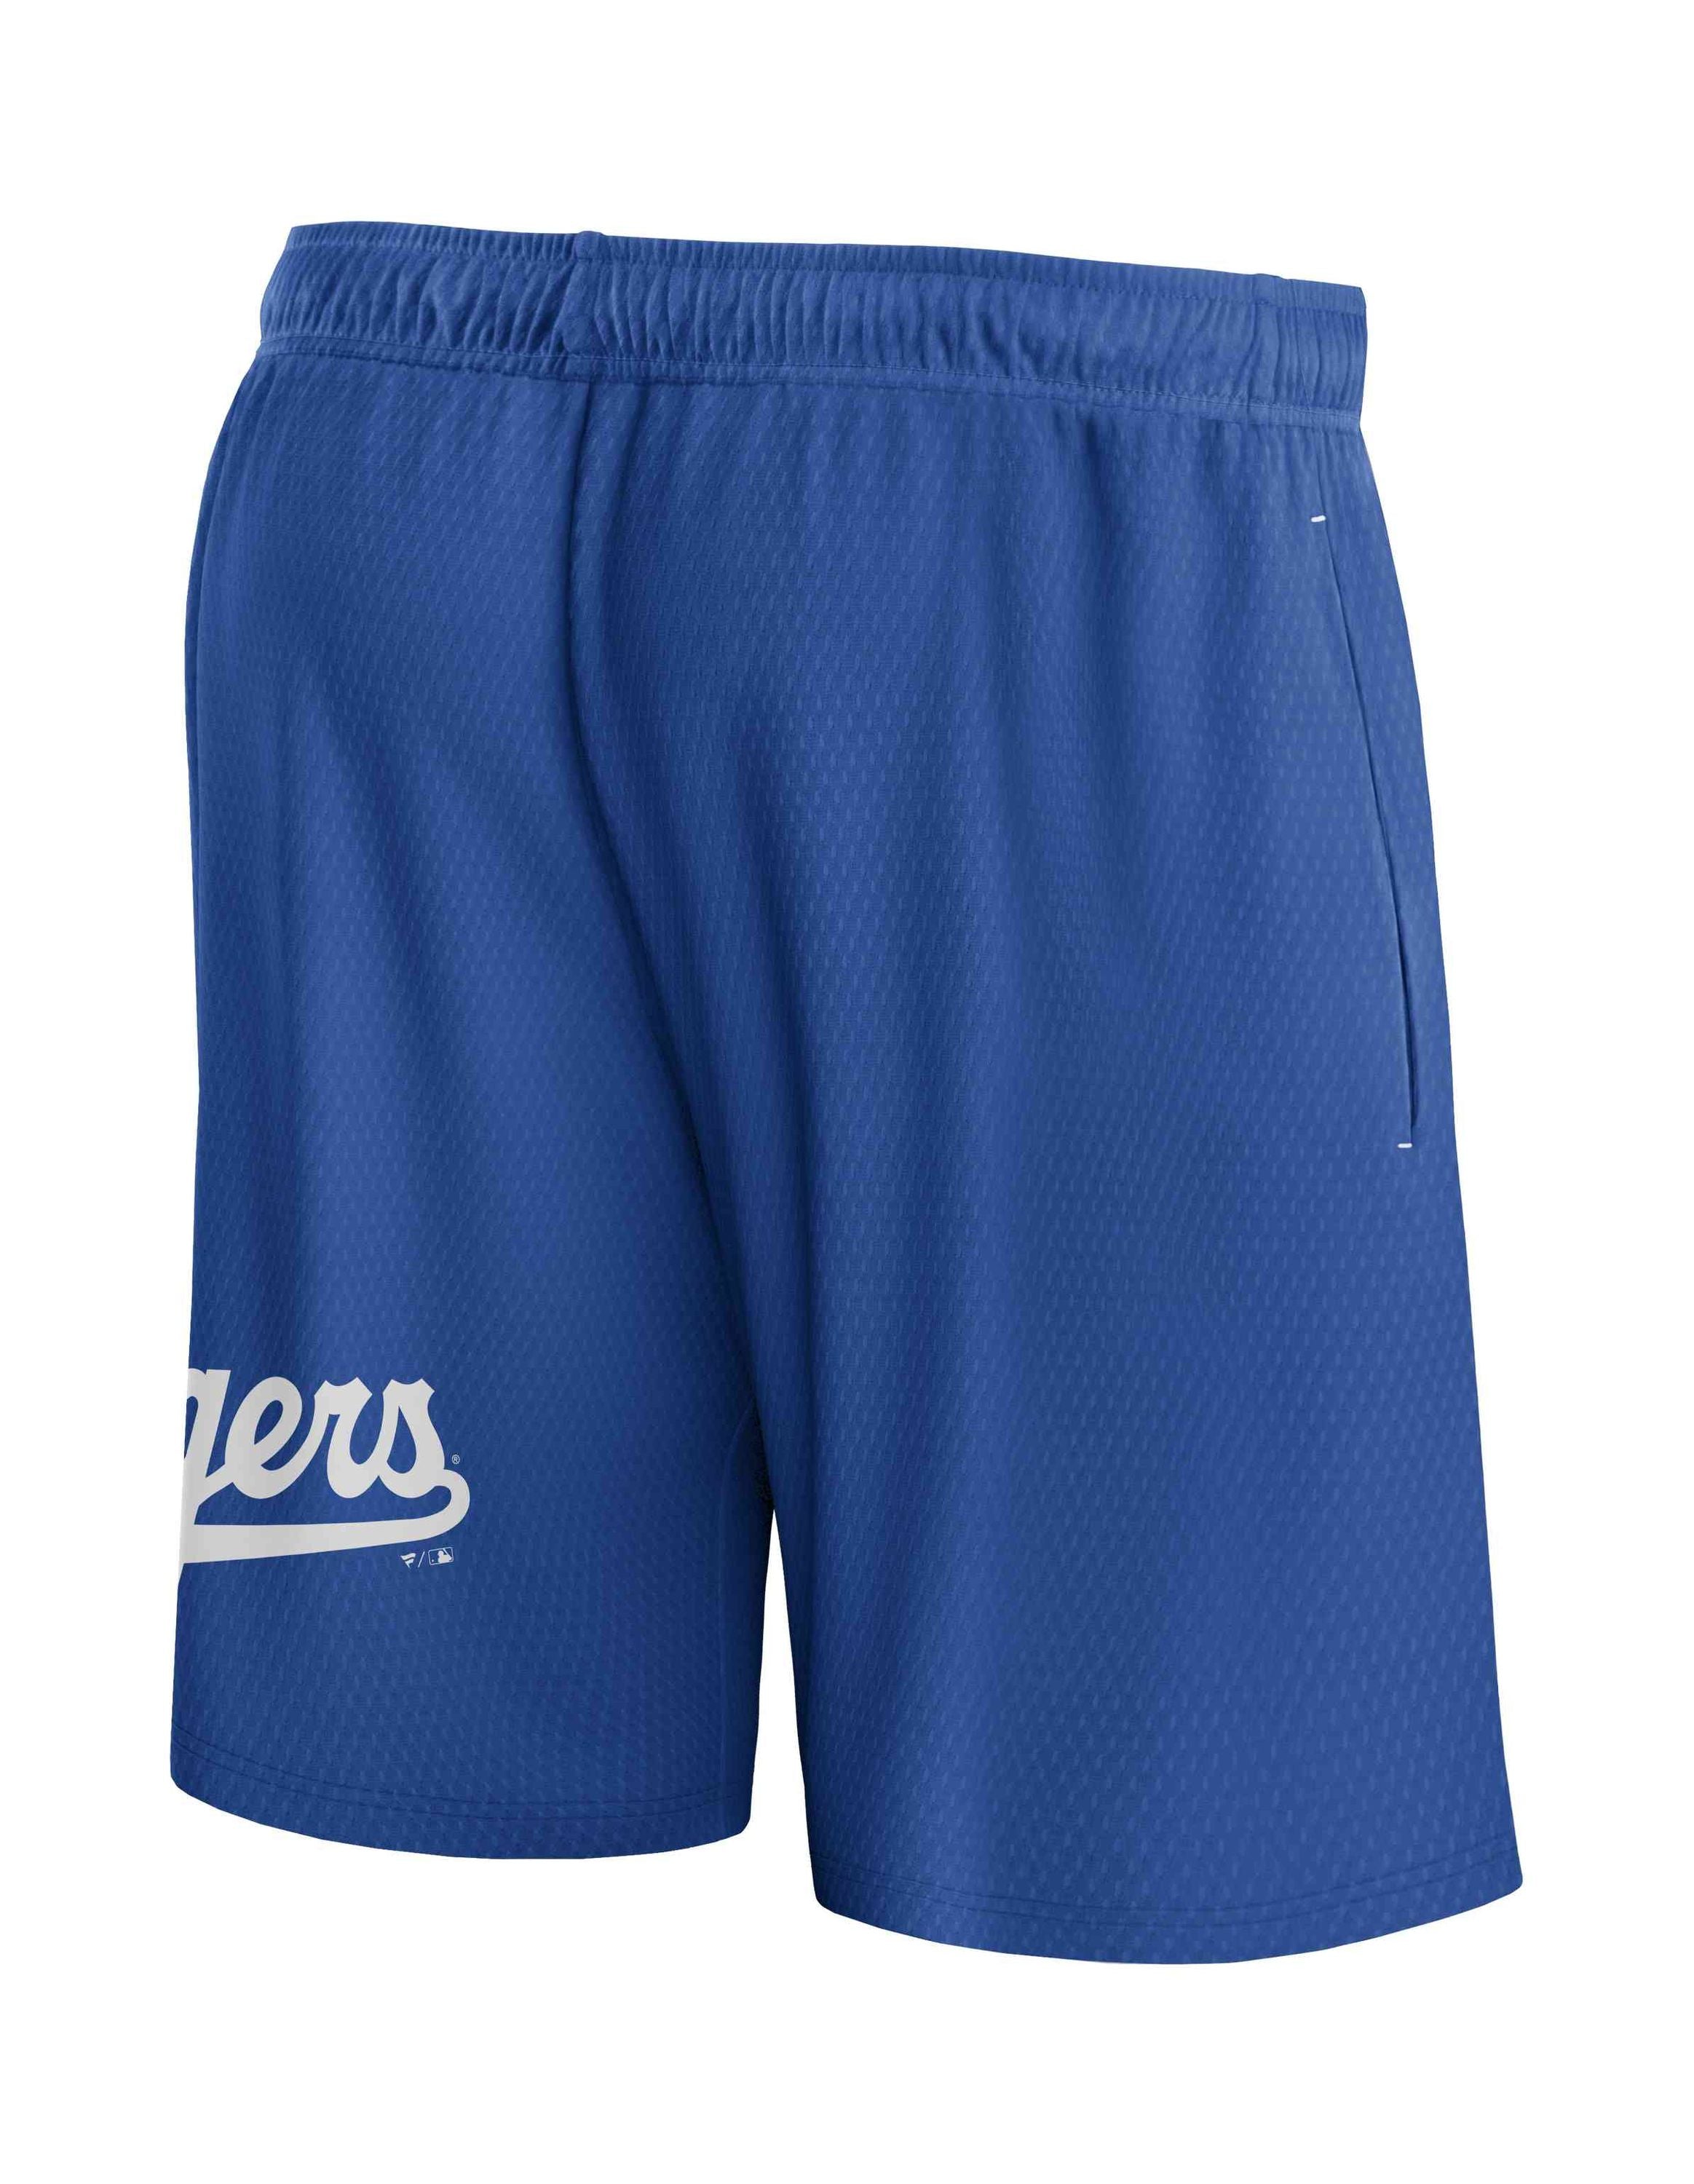 Fanatics - MLB Los Angeles Dodgers Mesh Shorts